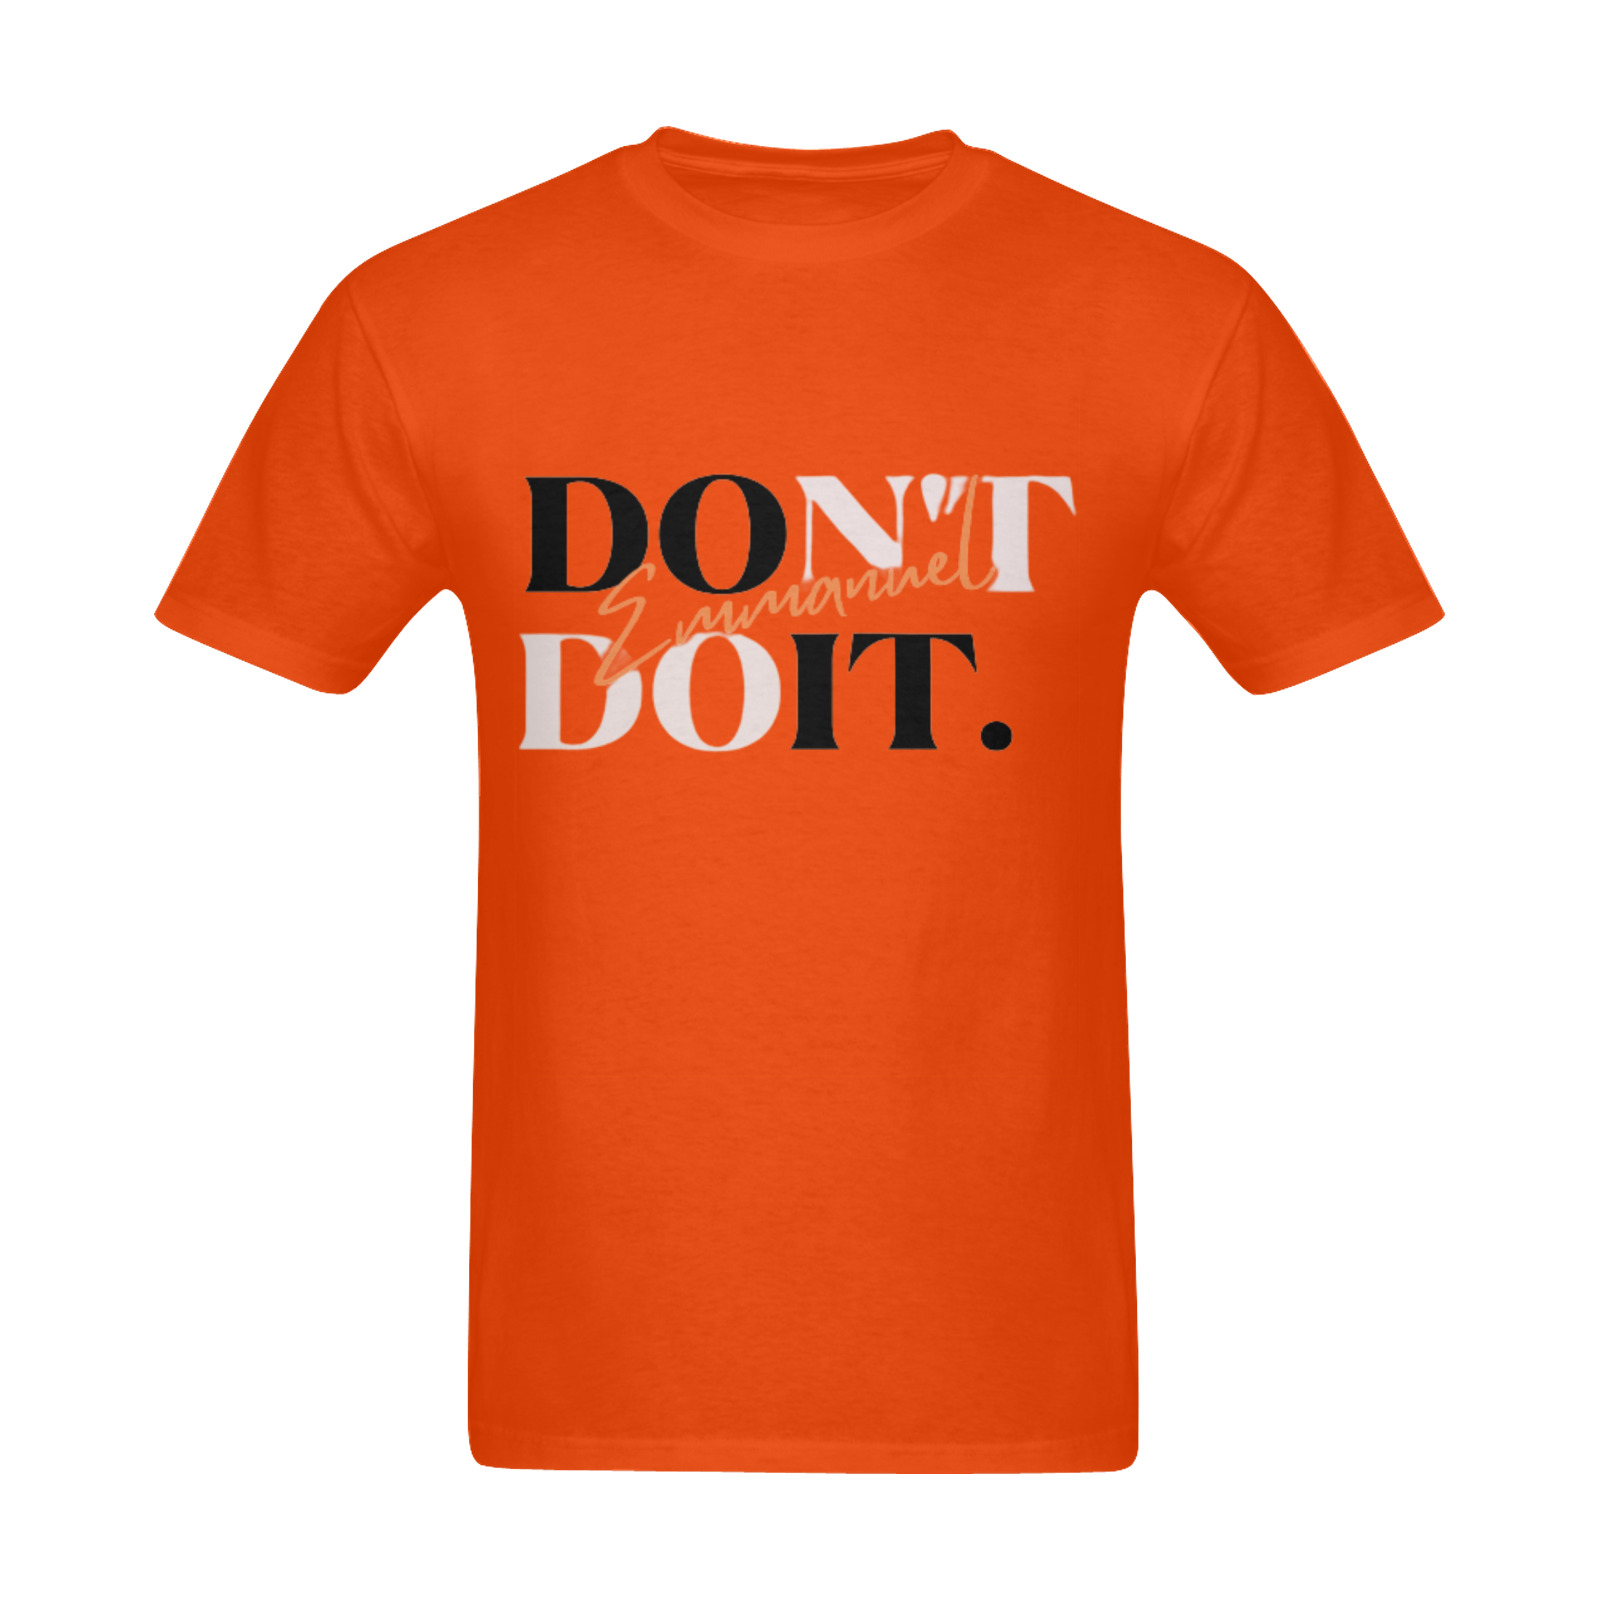 EMMANUEL DON'T DO IT! SUNNY MEN'S T-SHIRT ORANGE Sunny Men's T- shirt (Model T06)